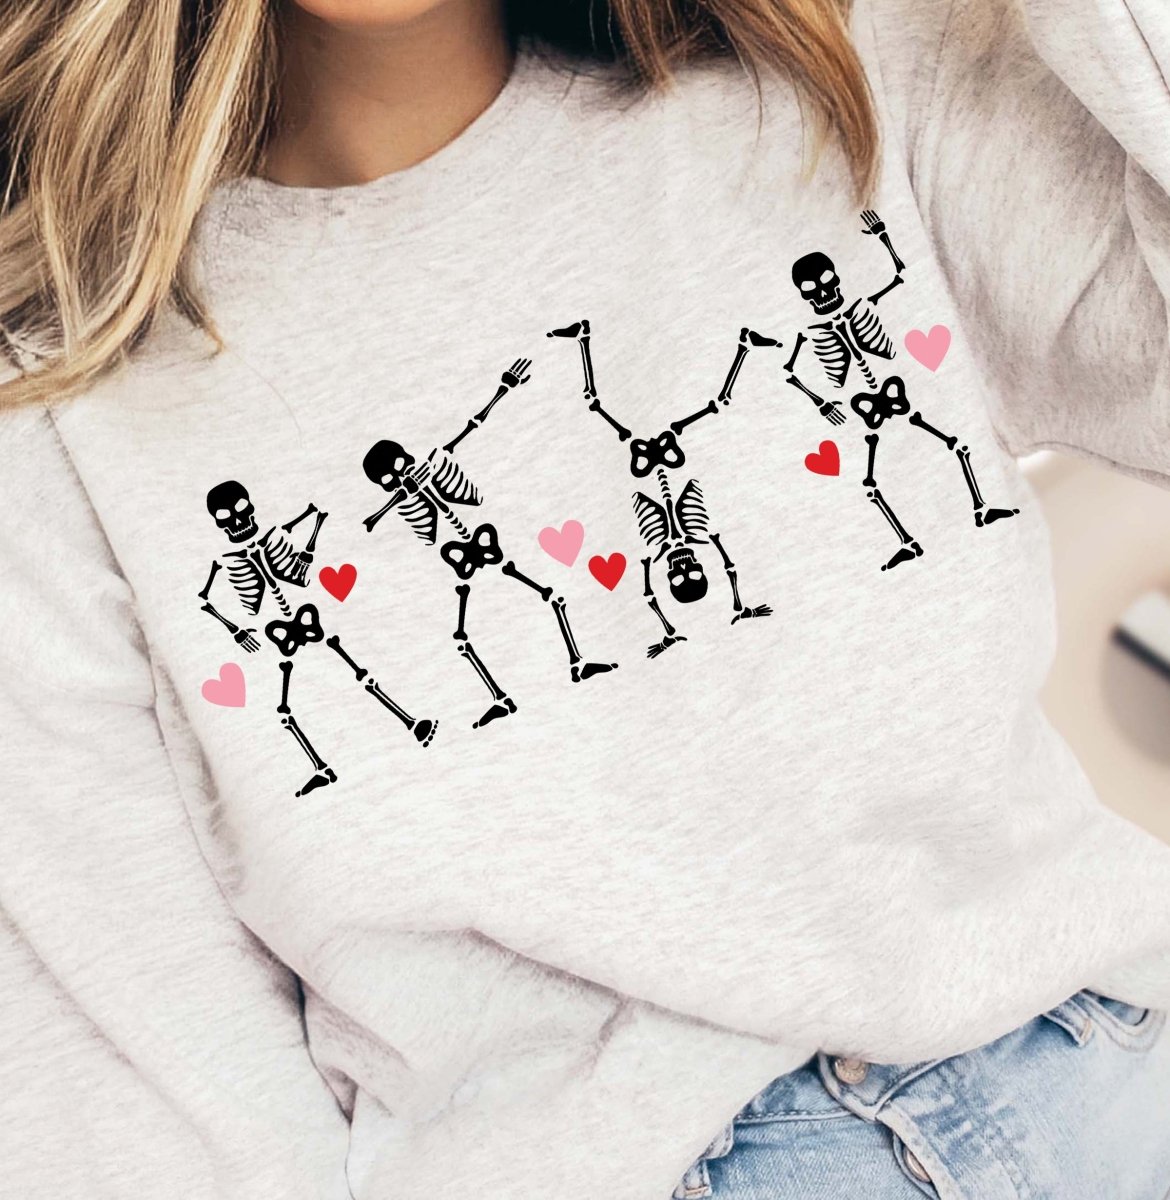 Dancing Skeleton Hearts Wholesale Crewneck Sweatshirt - Limeberry Designs